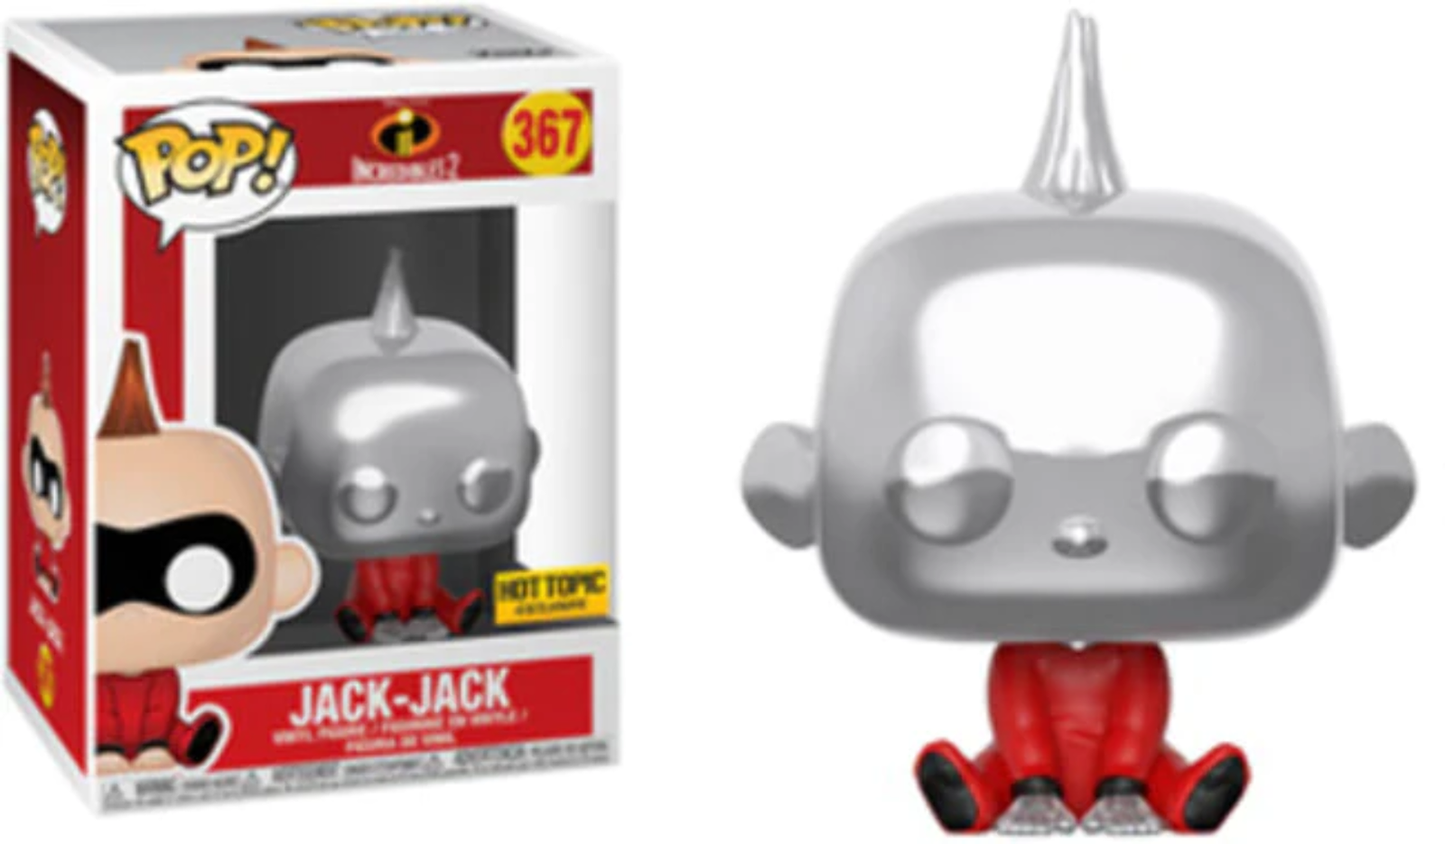 Funko Pop! Disney - Jack-Jack - Hot Topic - 367